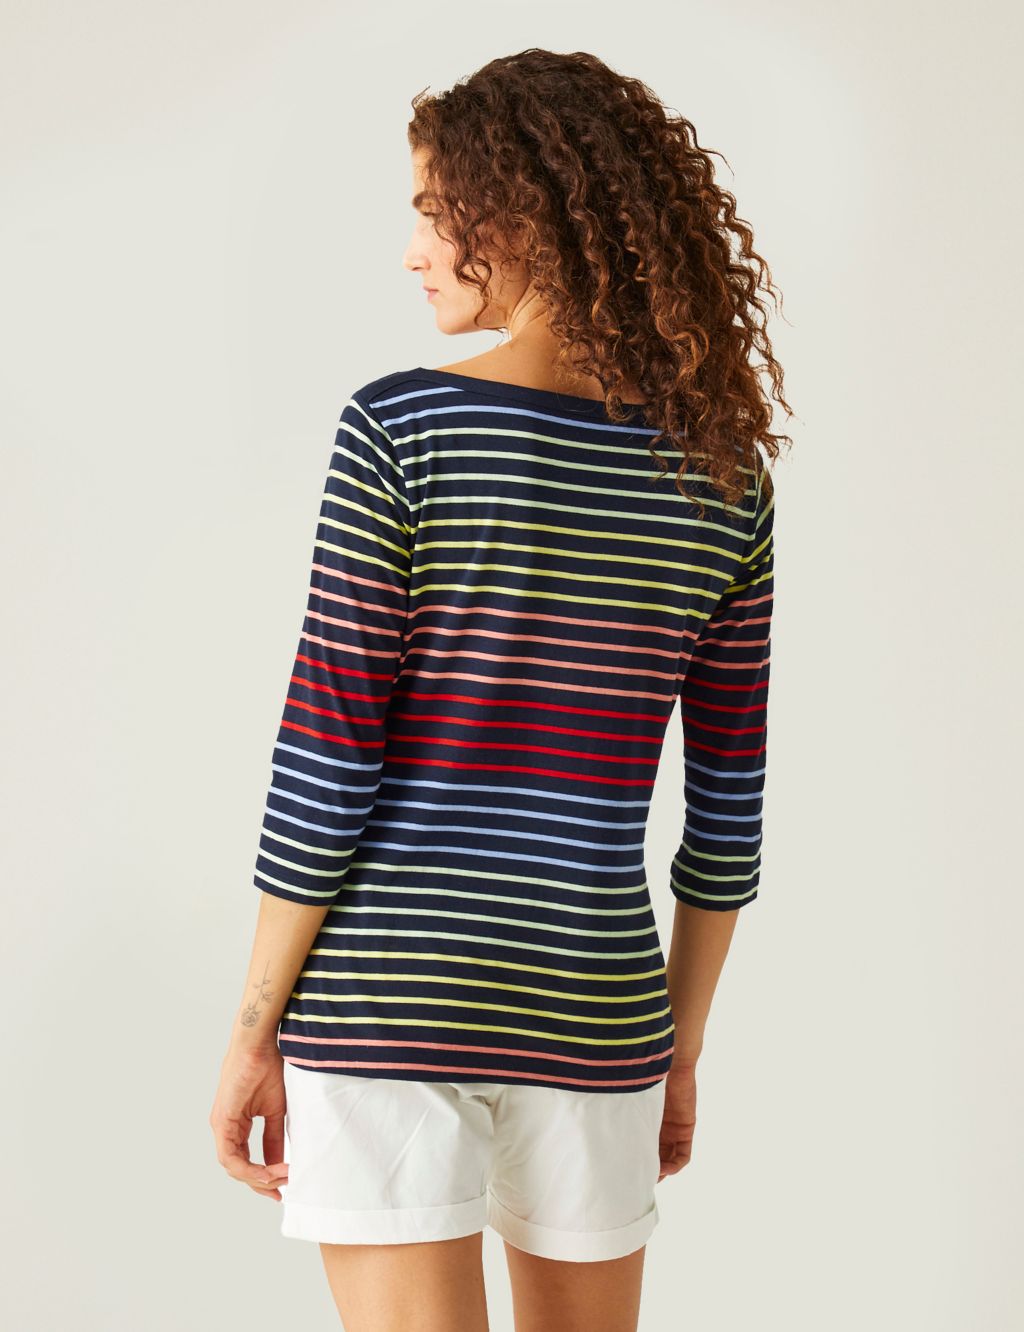 Bayletta Cotton Blend Striped T-Shirt image 4